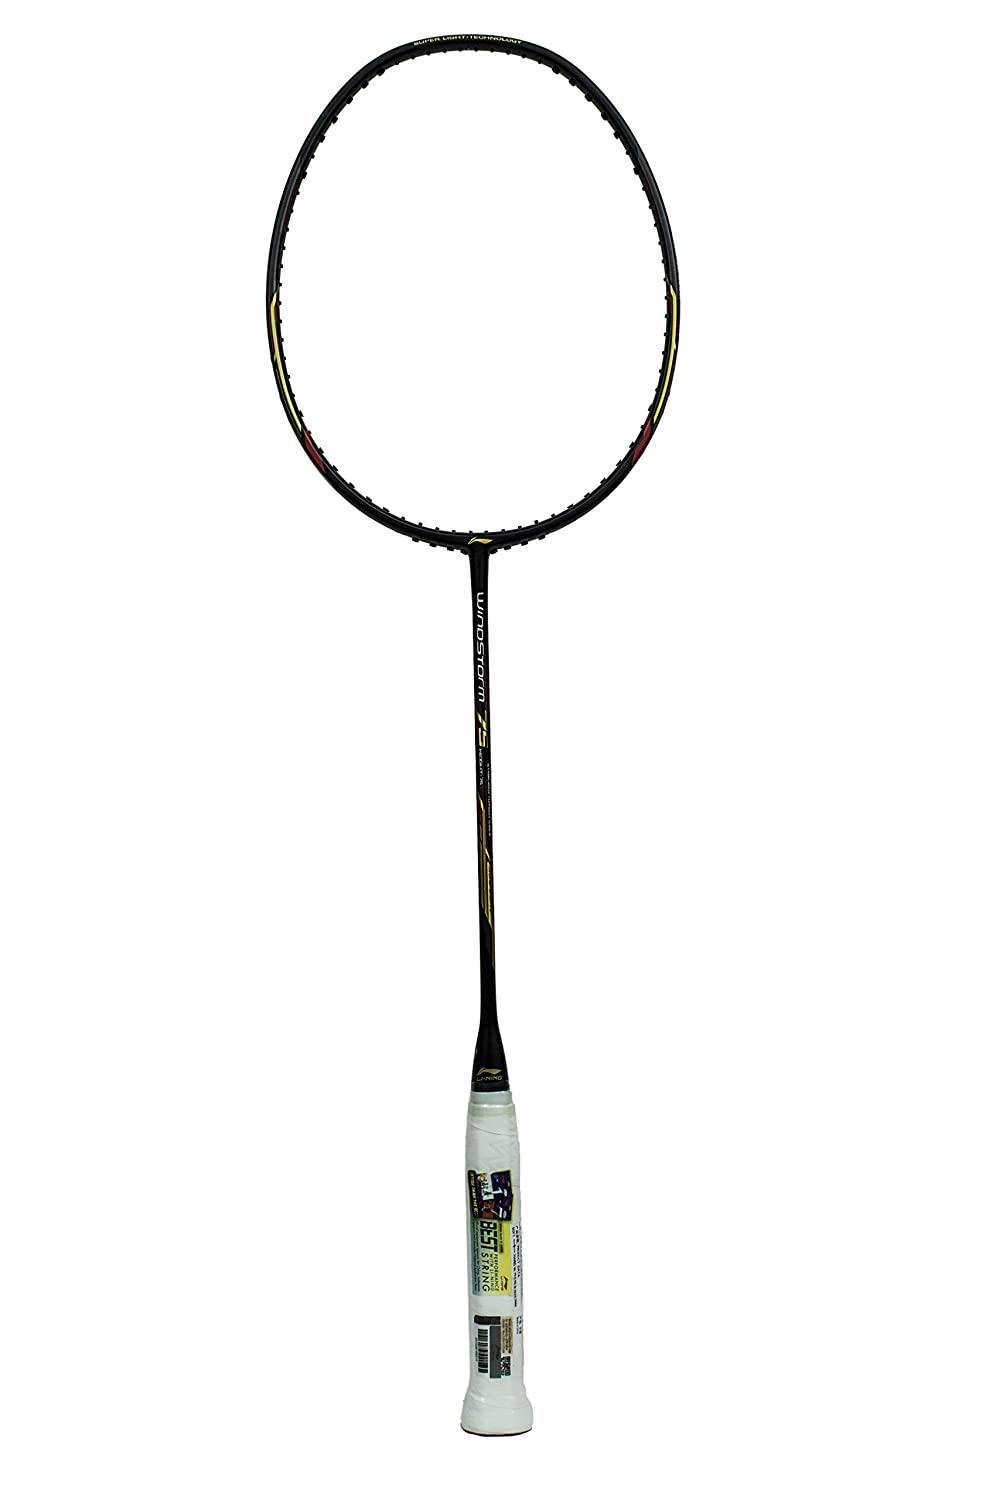 Li-Ning Windstorm 75 Carbon-Fiber Badminton Racquet Black/Gold - Best Price online Prokicksports.com